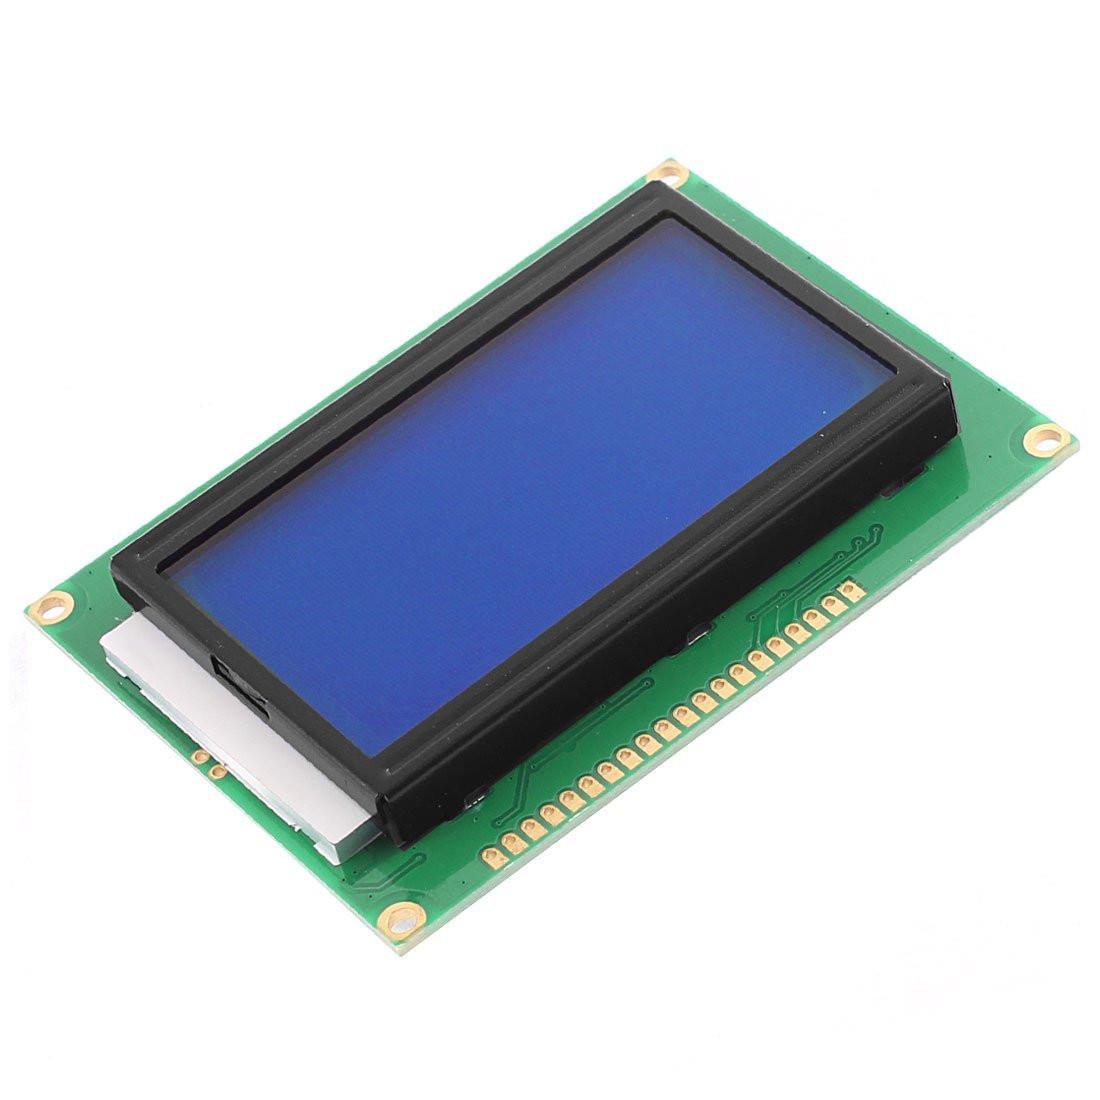 128x64 LCD Display Module Blue Backlight